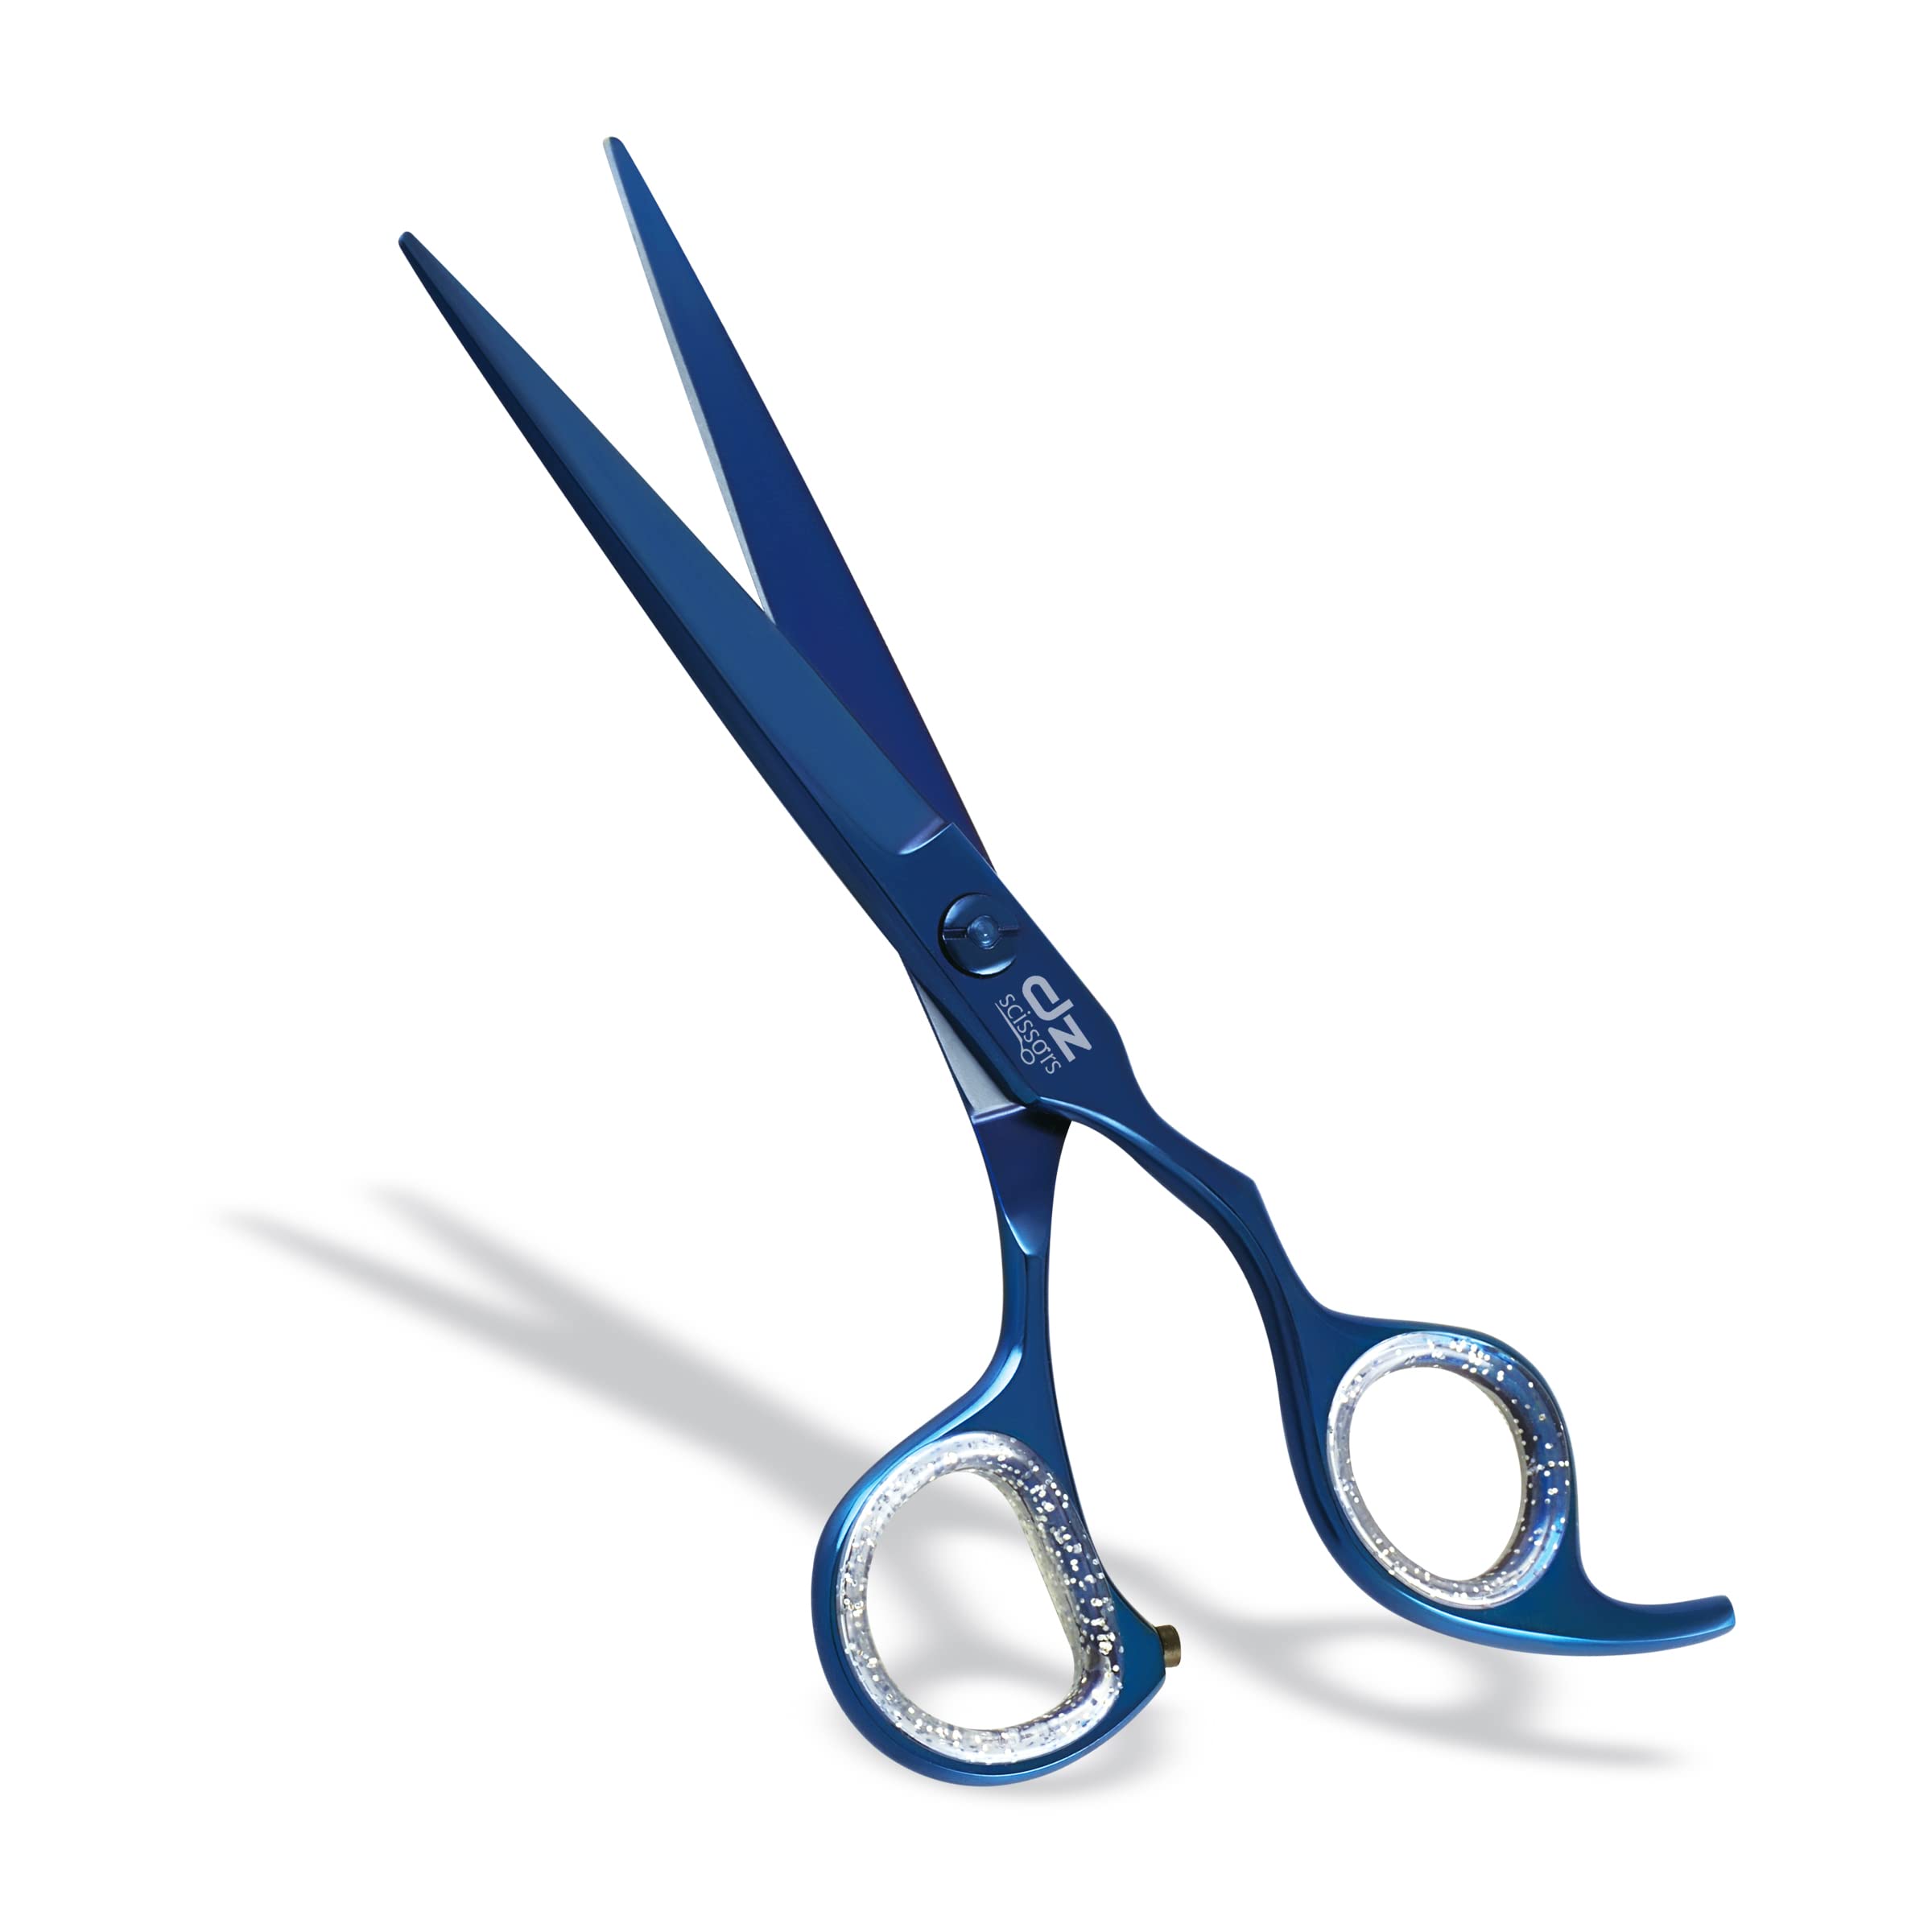 DZ Haarschere Crane Ergo Design Friseurschere 6 Zoll Haarschneideschere aus Edelstahl (Blau)